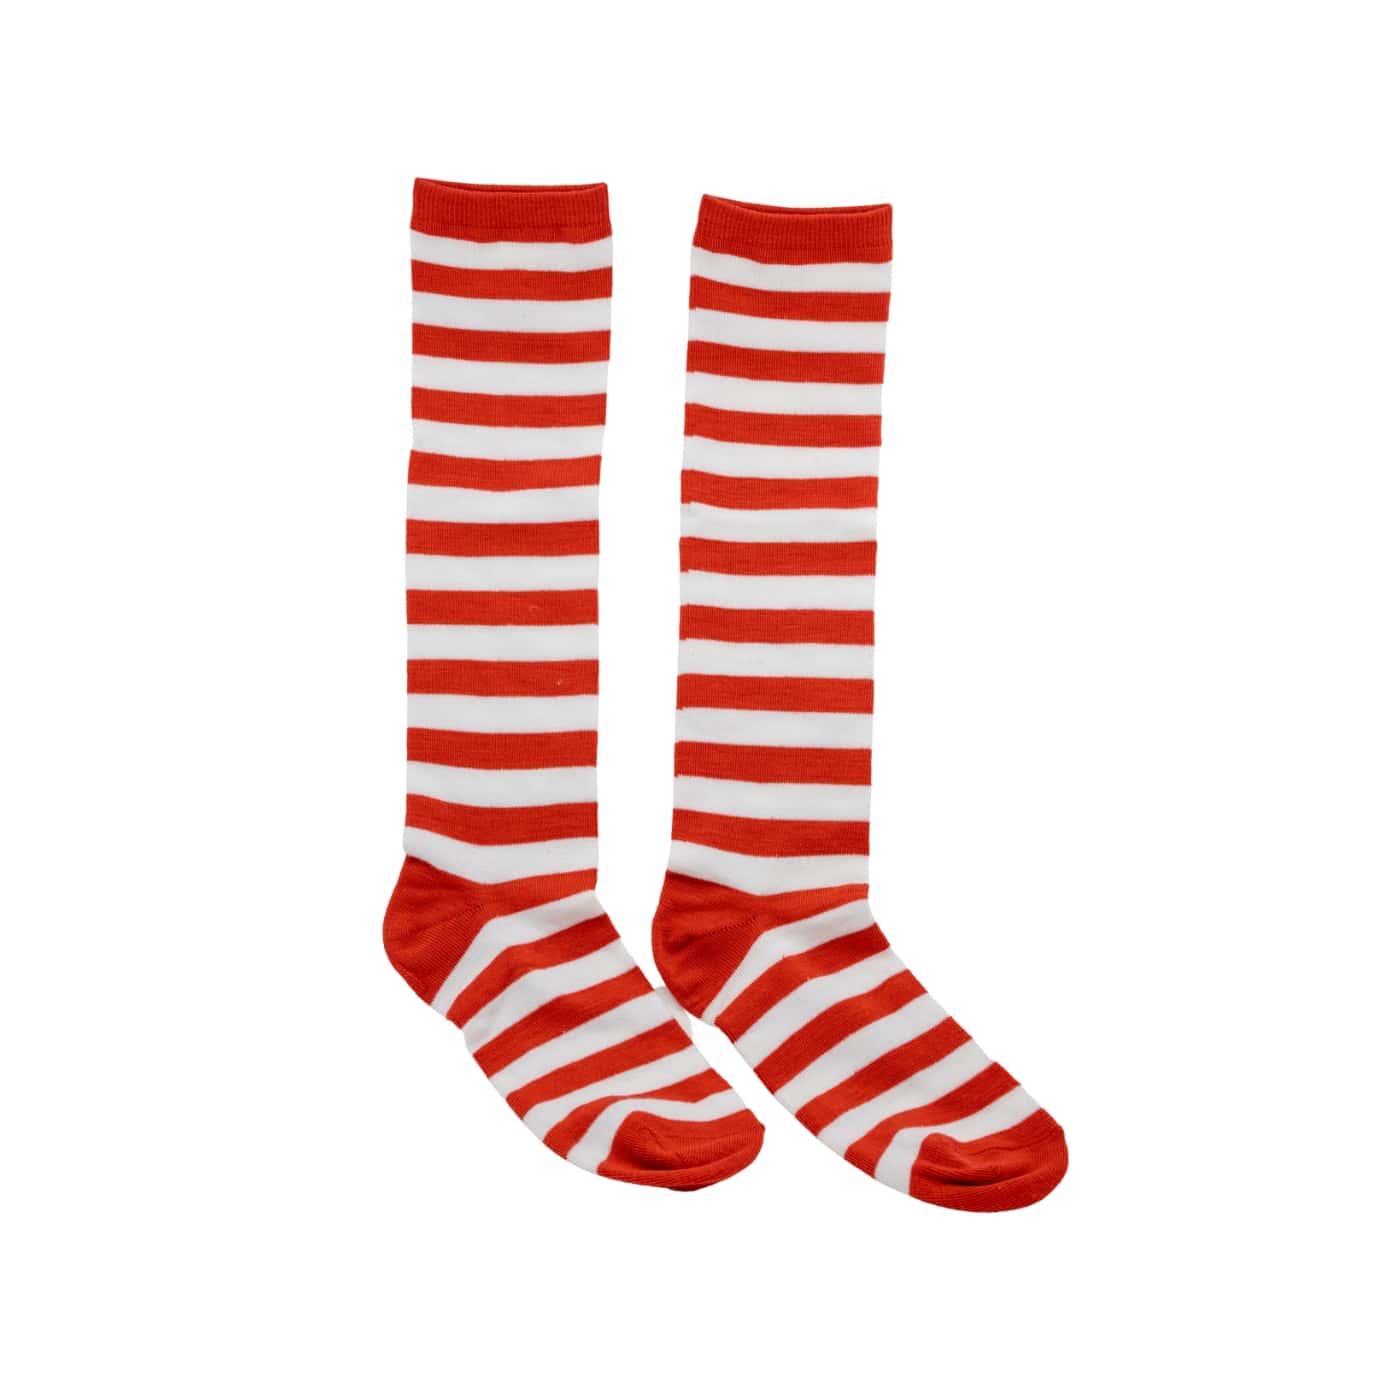 Red & White Stripe Knee High Socks by RainbowsAndFairies.com.au (Stripe Long Socks - Rainbow - Stockings - Colourful Socks - Vintage Inspired) - SKU: FW_SOCKS_STRIPE_R&W - Pic-02